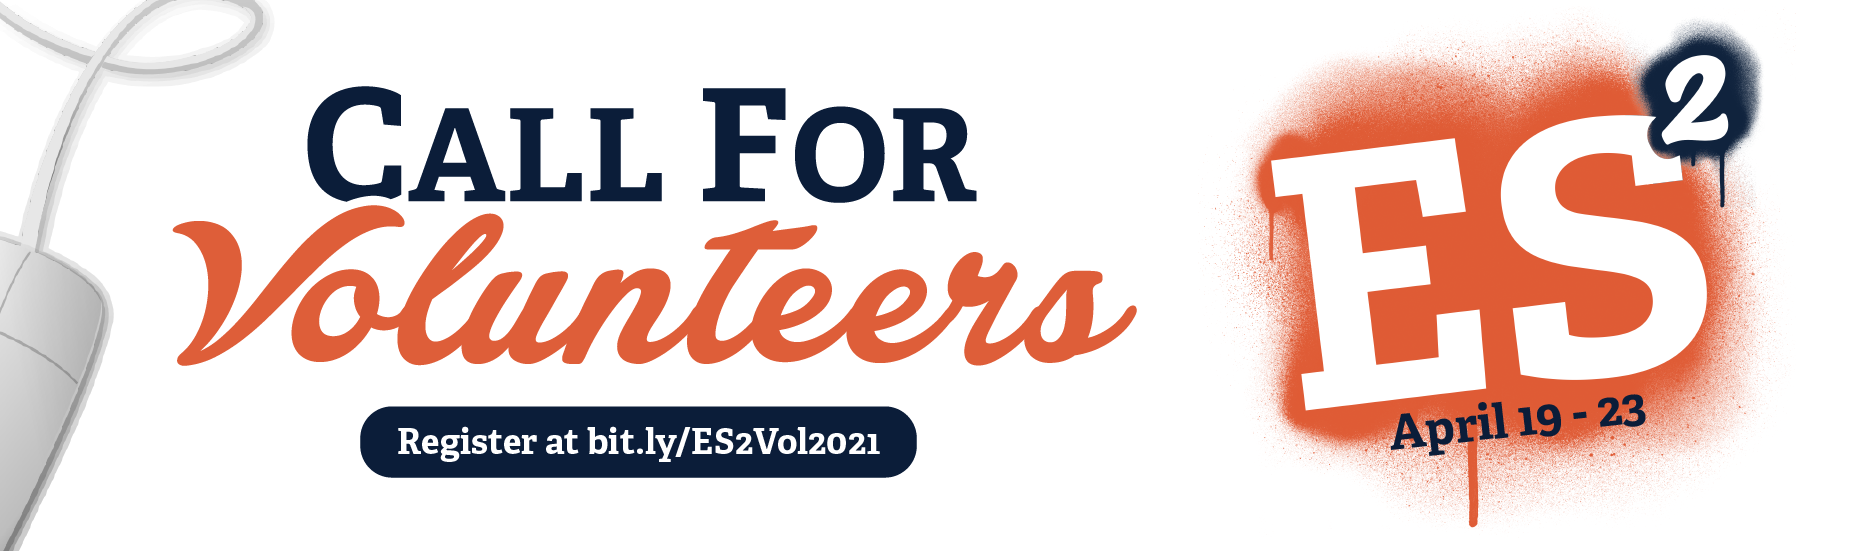 ES2 Call for Volunteers